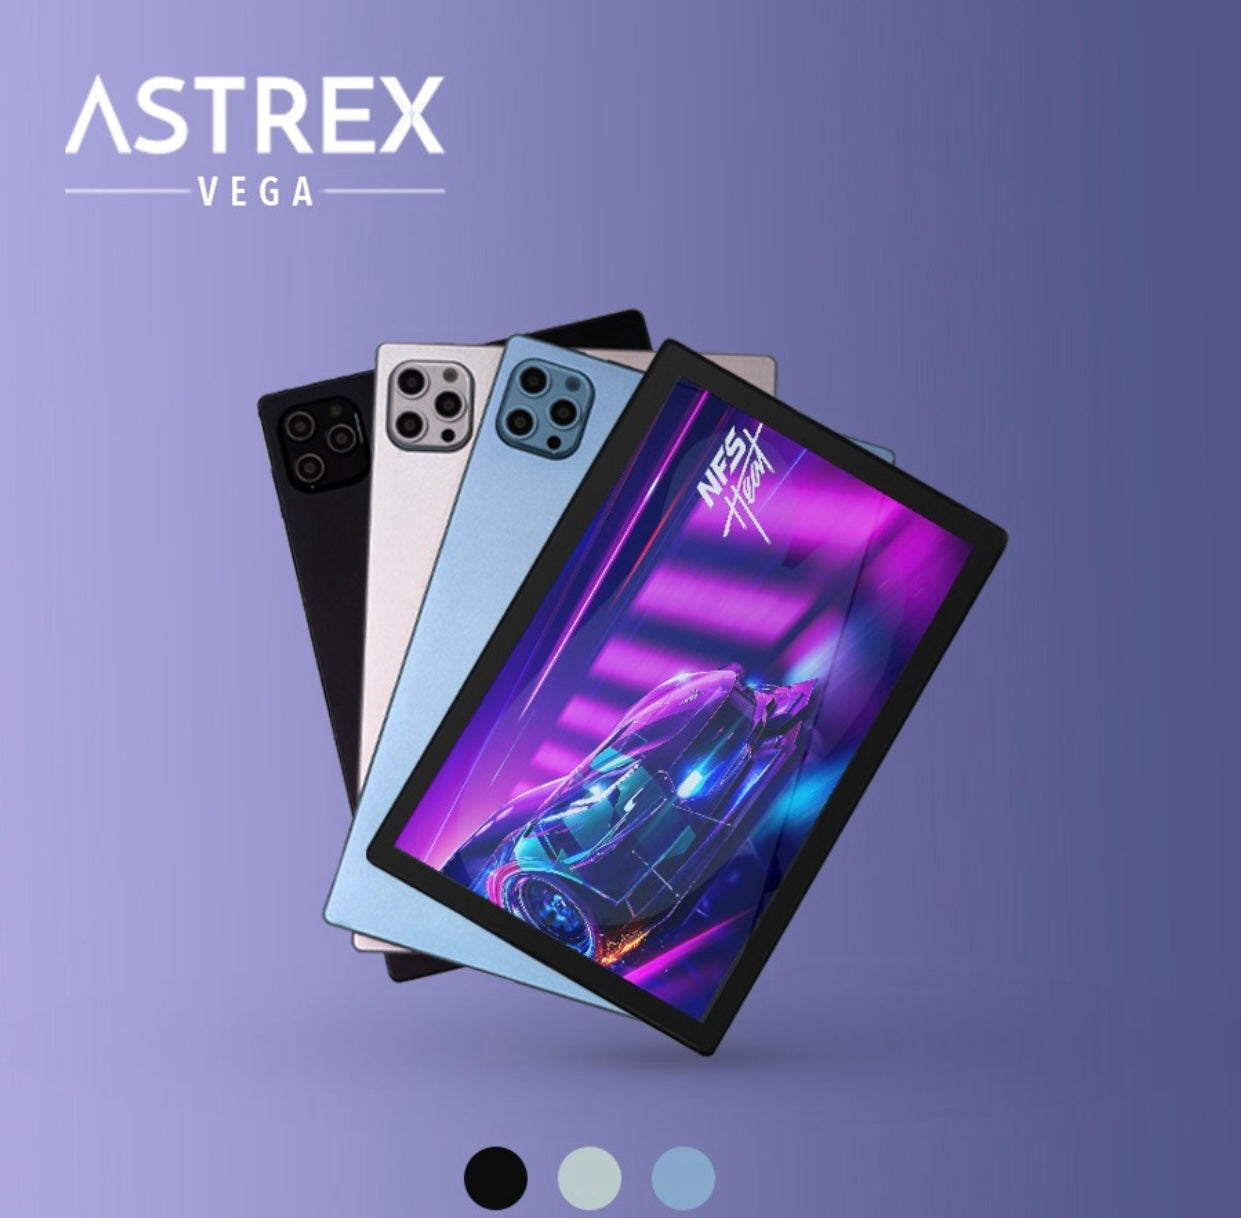 Astrex tablet - Vego